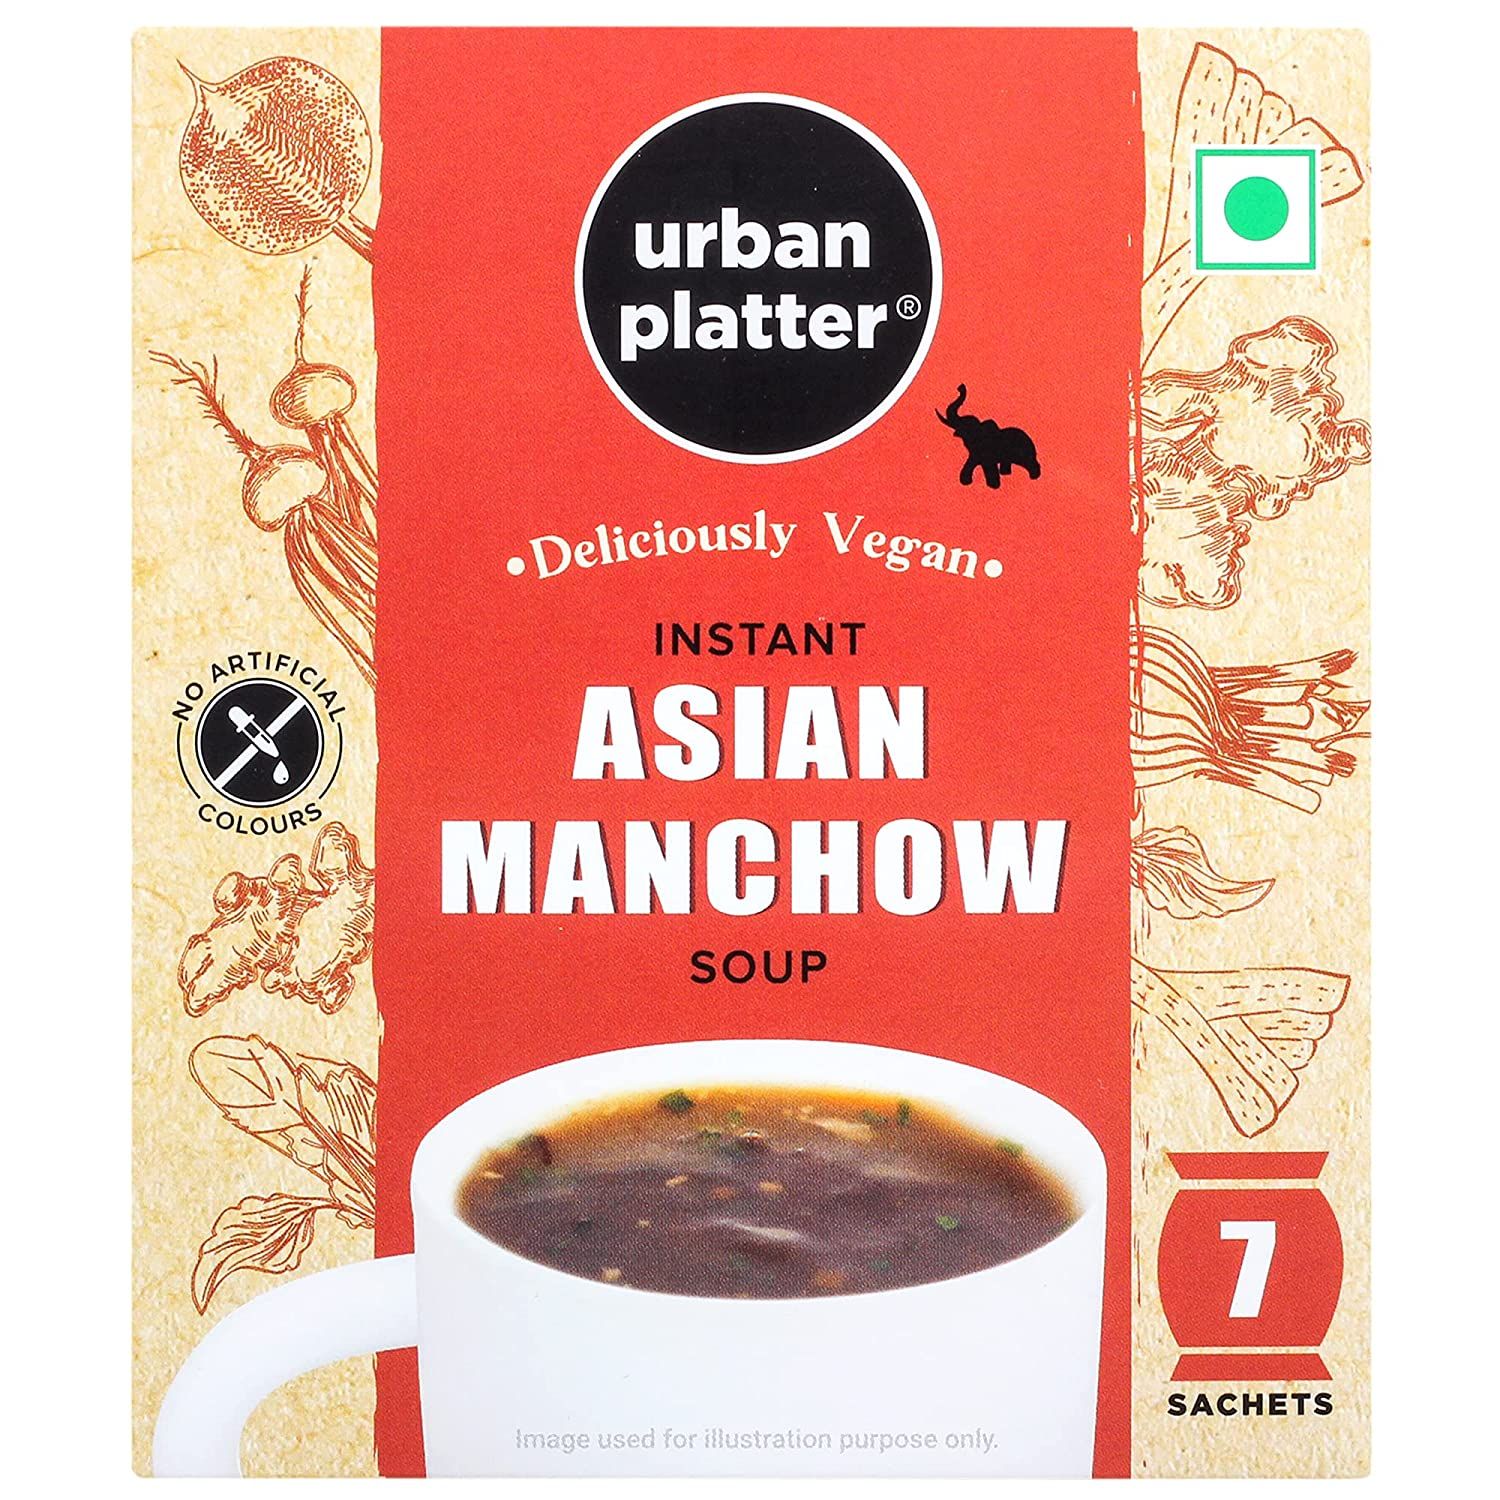 Urban Platter Vegan Instant Asian Manchow Cup Soup Image